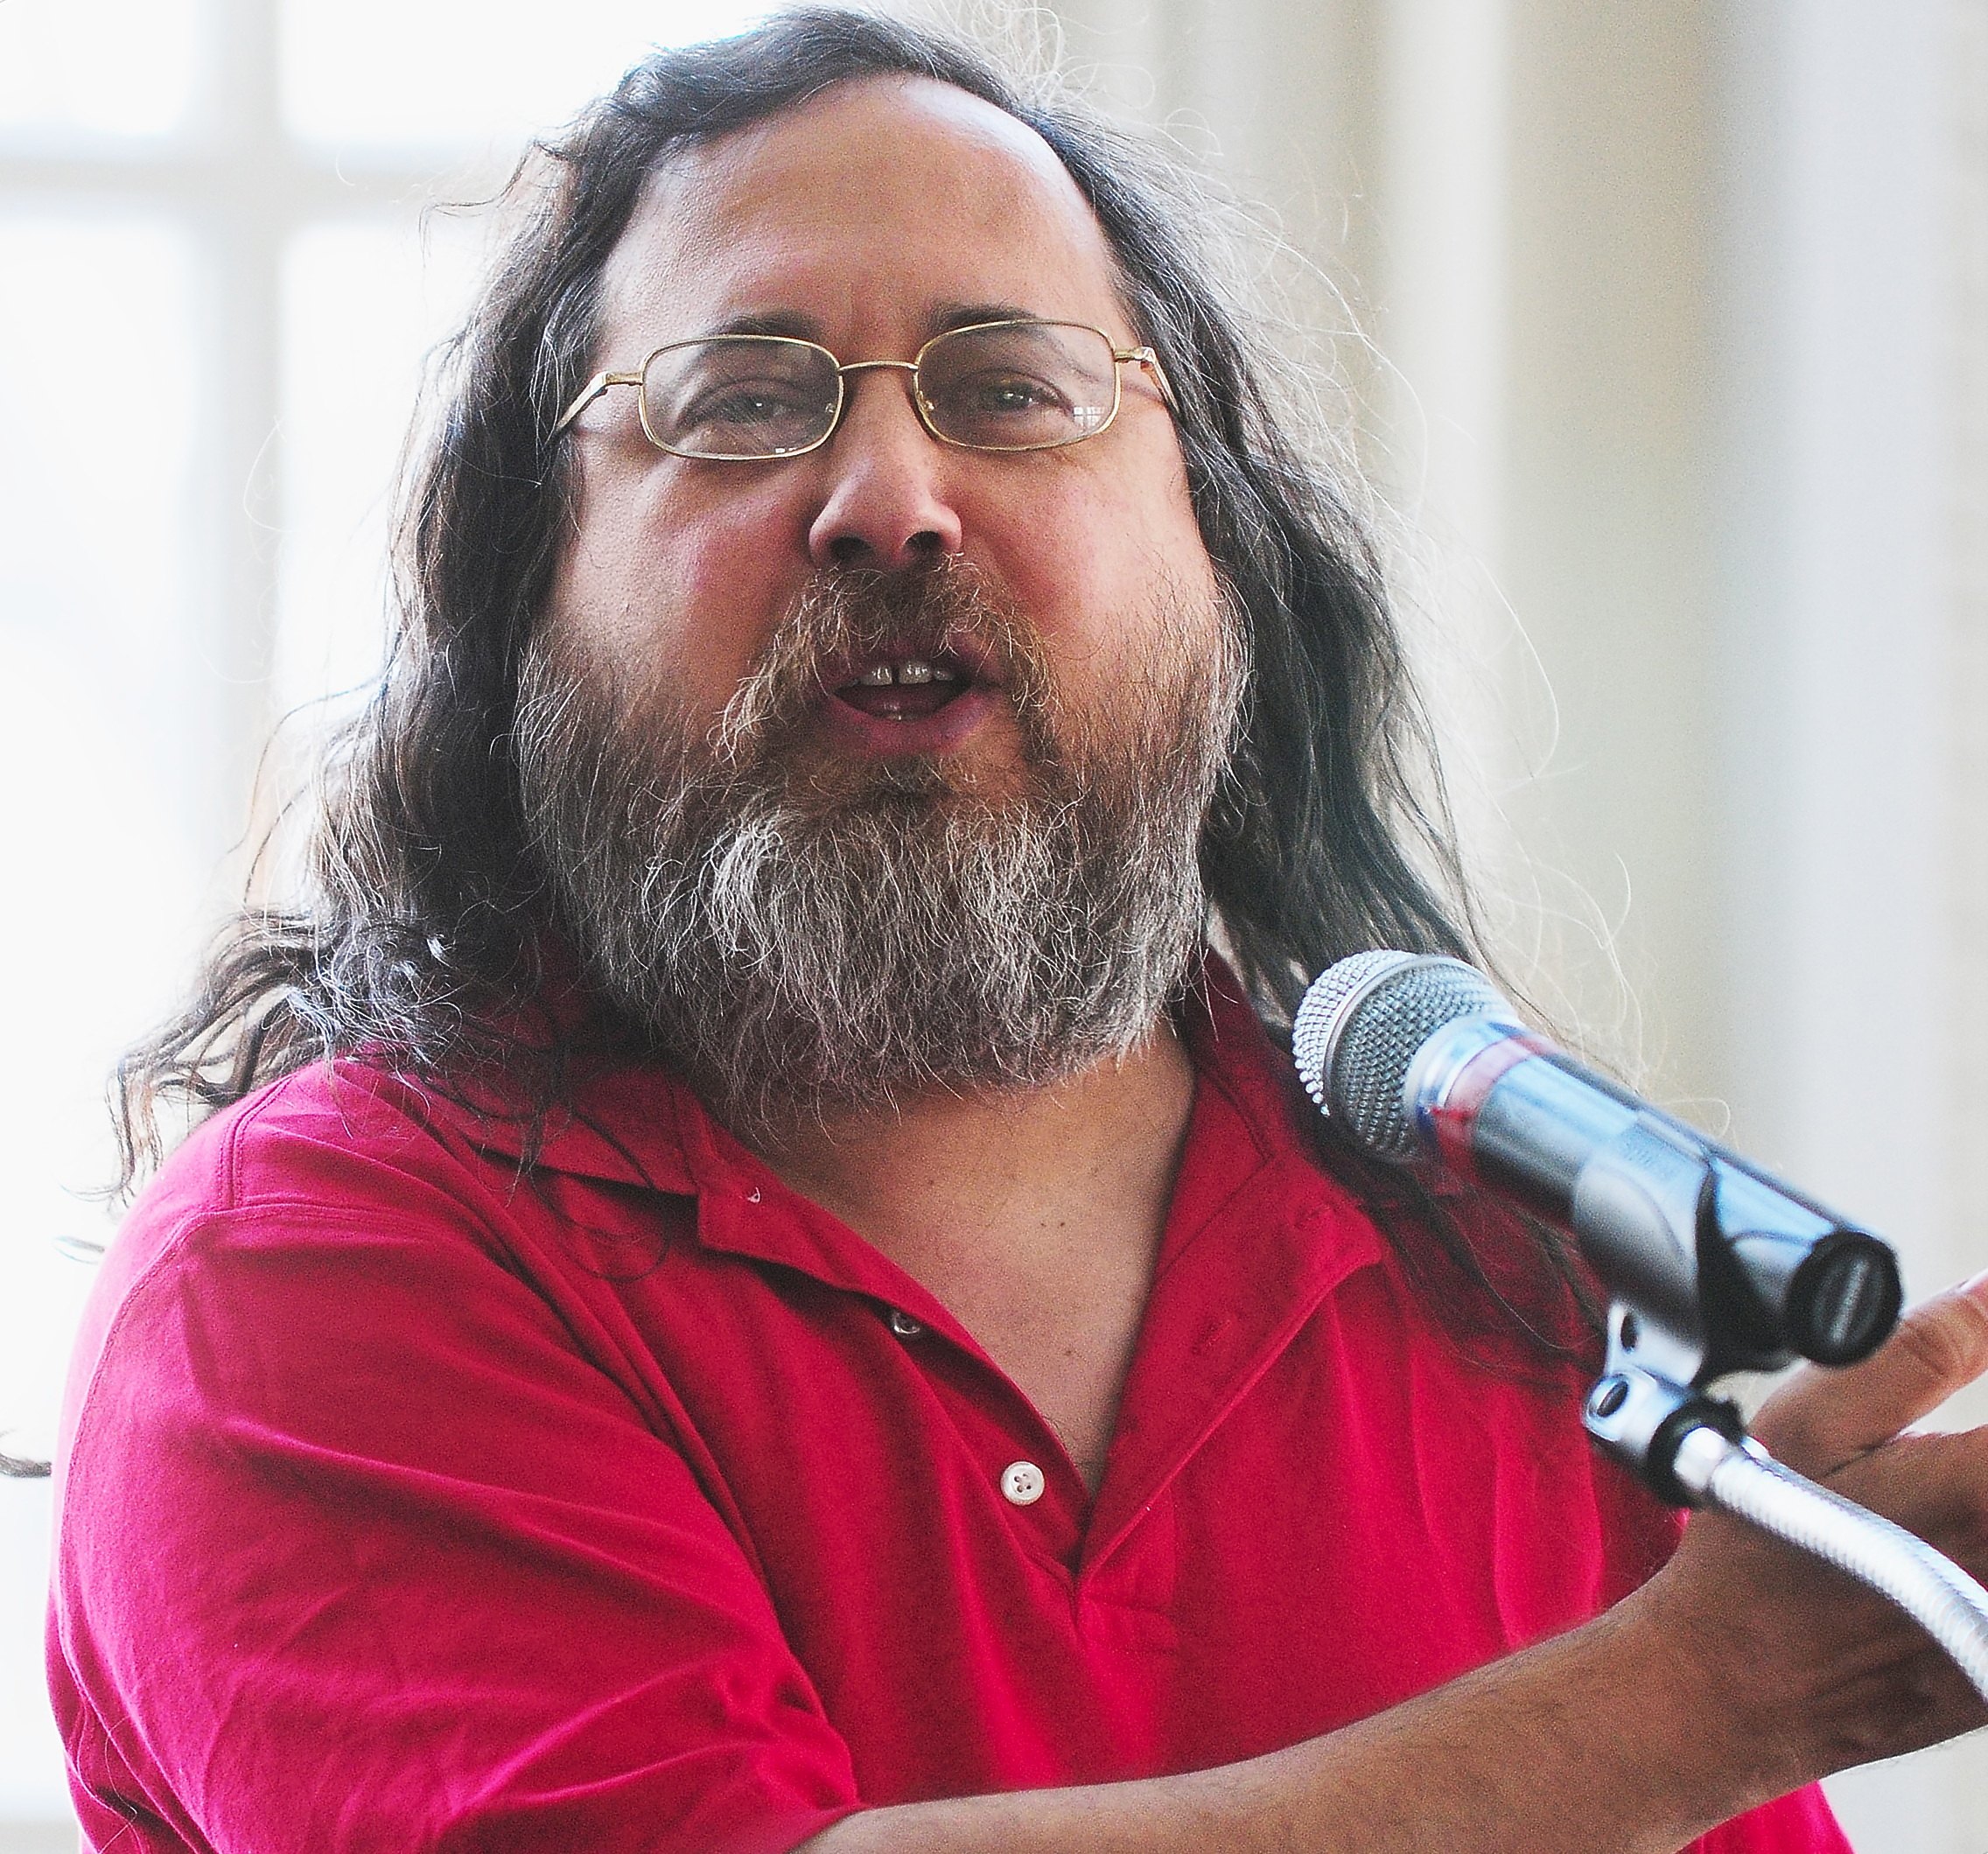 [**Richard Matthew Stallman**](https://pt.wikipedia.org/wiki/Richard_Matthew_Stallman) (**rms**), fundador do movimento de software livre, do [**projeto GNU**](https://www.gnu.org/) e da [**Free Software Fundation**](https://www.fsf.org/) em uma de suas palestras.